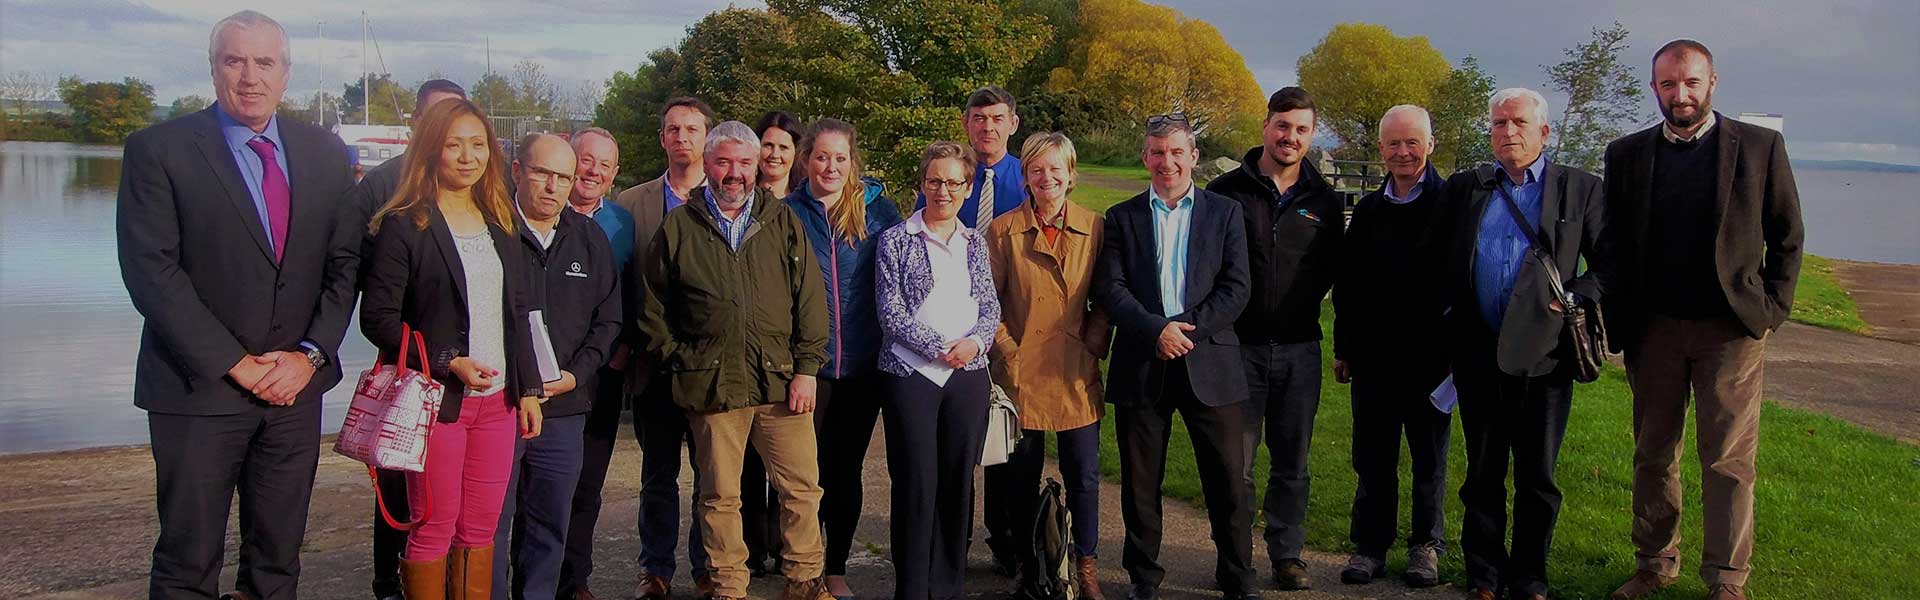 Lough Neagh Landscape Partnership